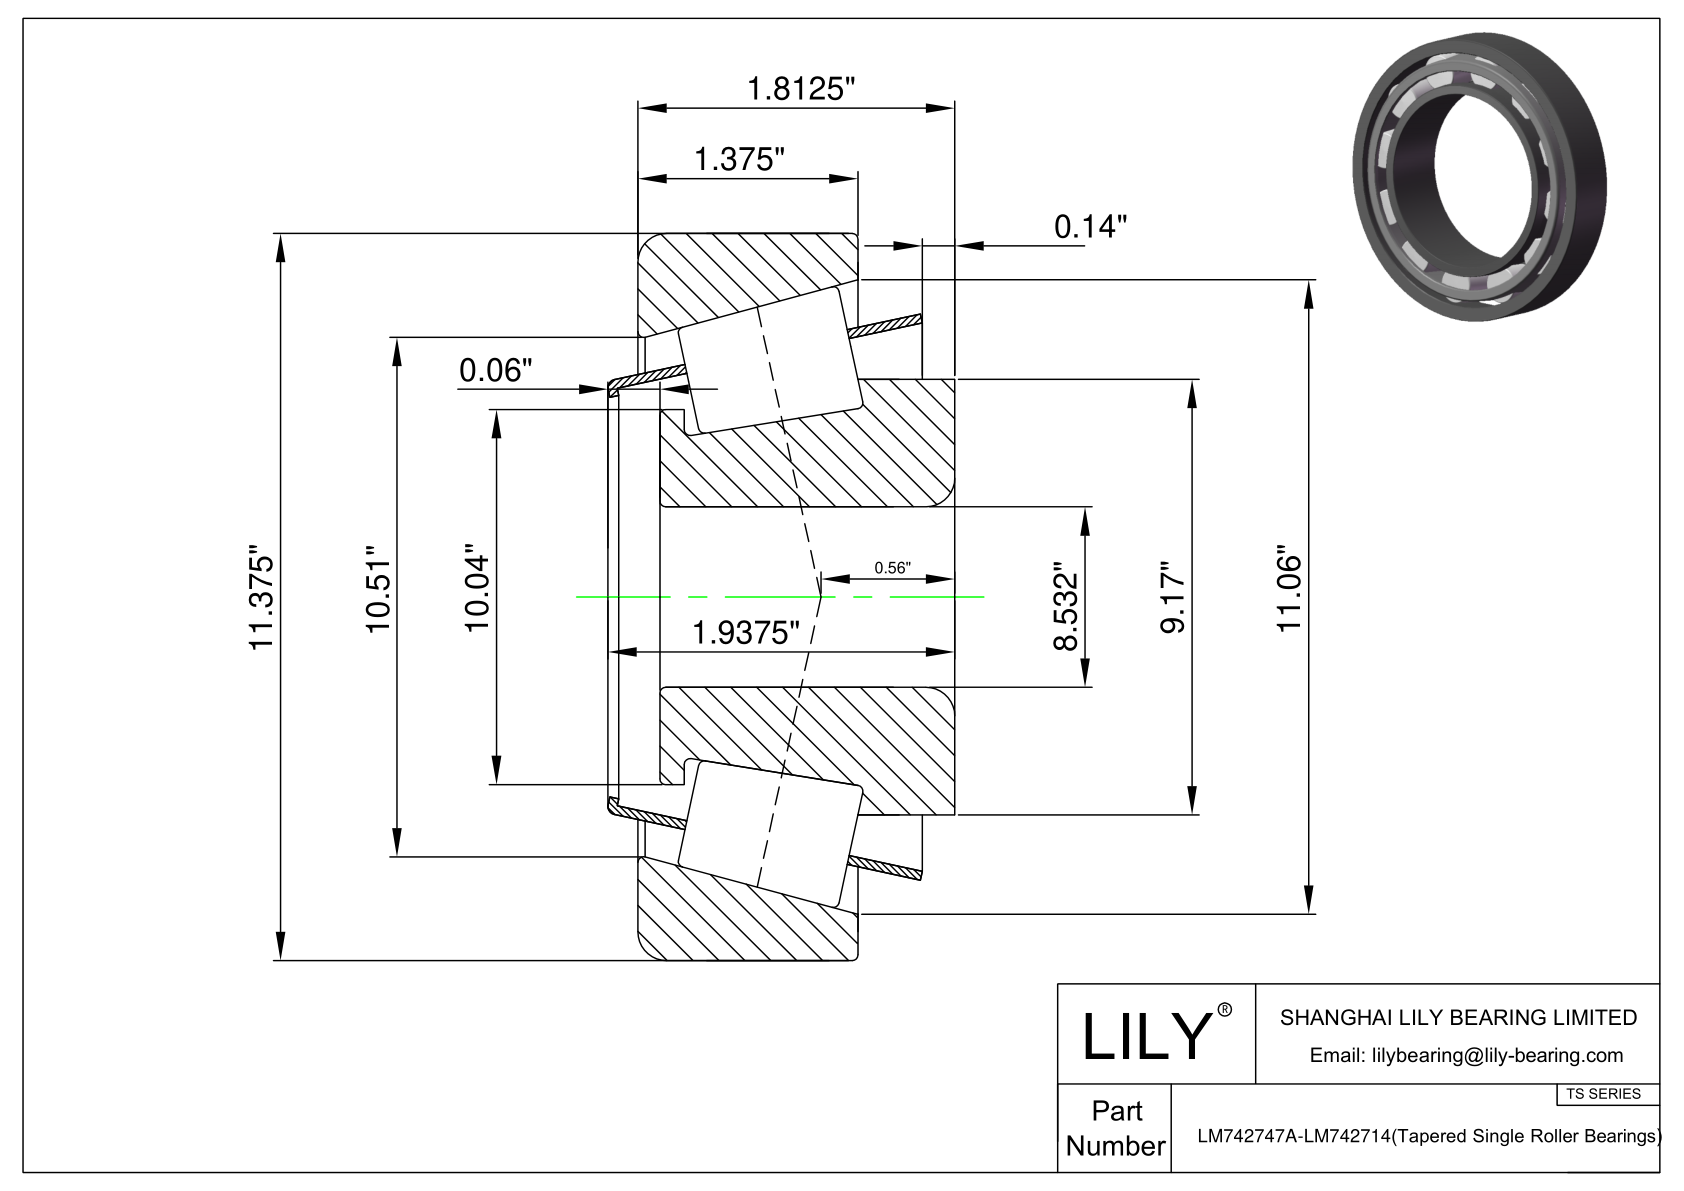 LM742747A-LM742714 TS系列(圆锥单滚子轴承)(英制) CAD图形